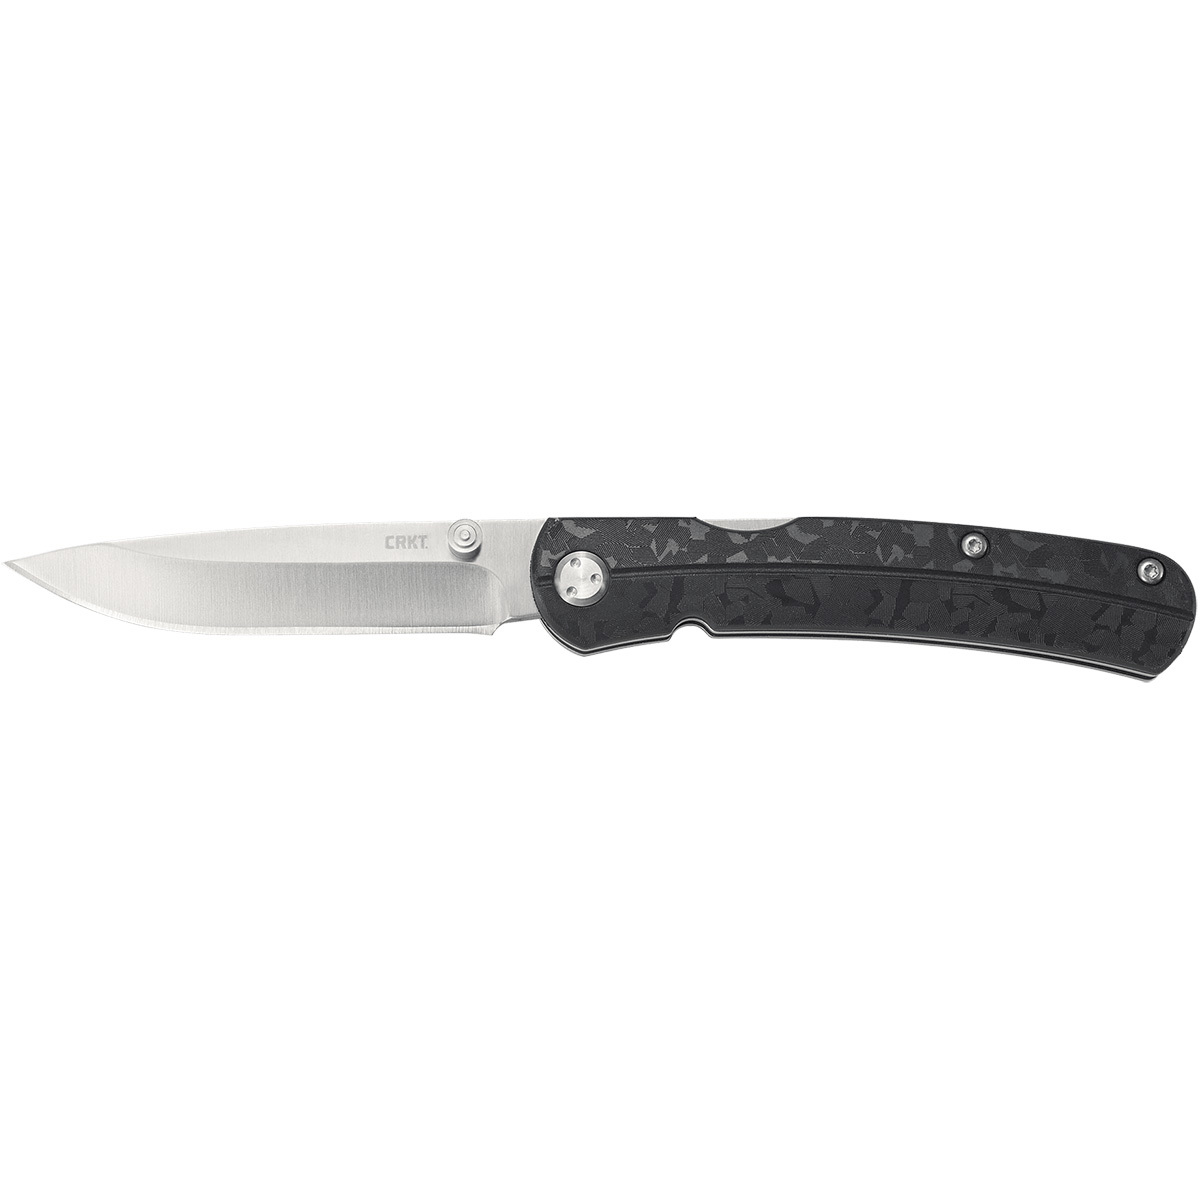 Складной нож CRKT Kith Black, сталь 8Cr13MoV, рукоять nylon - фото 1